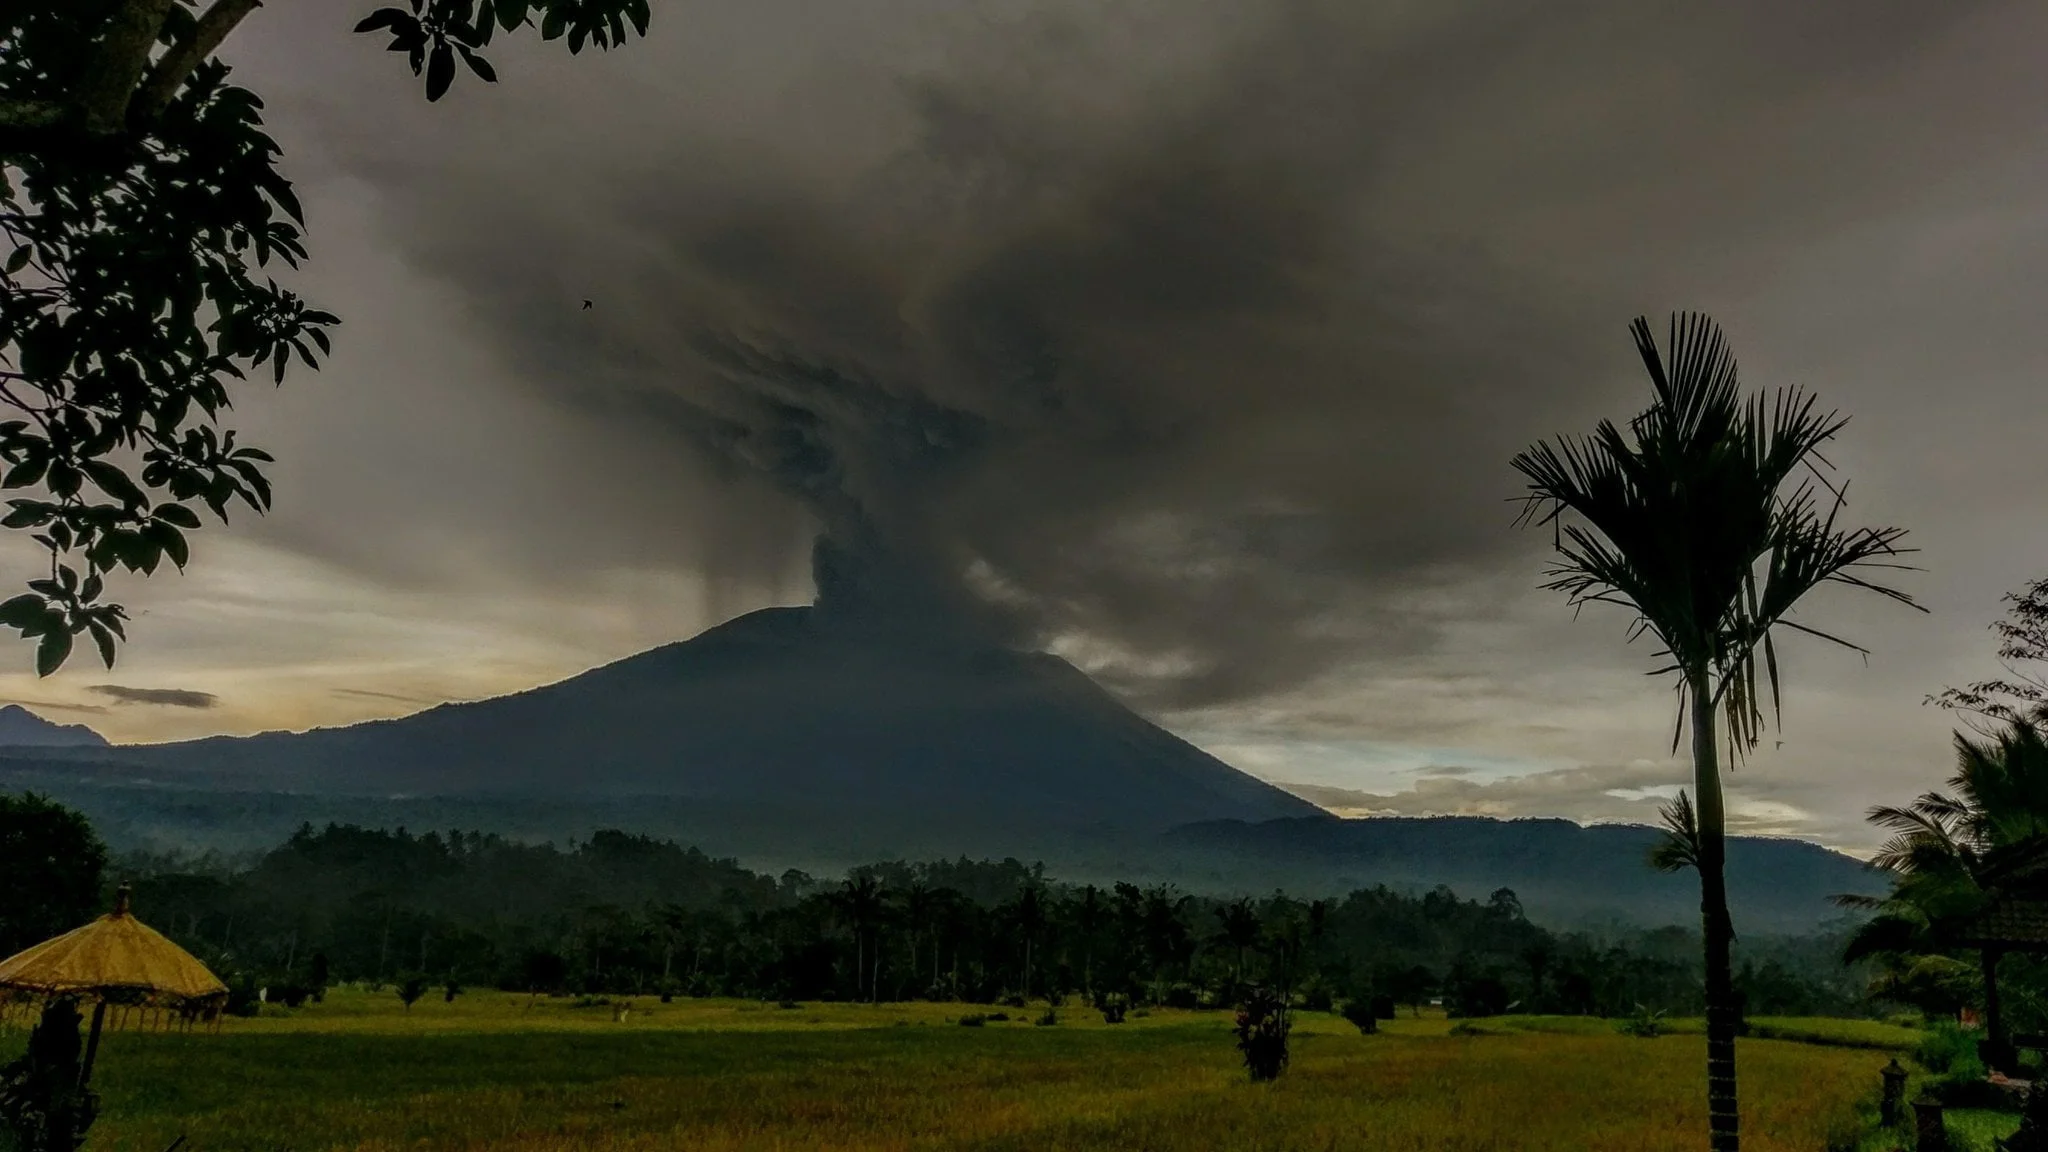 Gunung Agung, Bali 17.25 on 26 Nov17 - @ReelLifePhotos